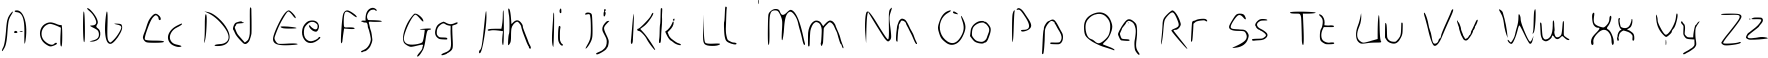 Пример написания английского алфавита шрифтом Disco-Grudge Lite (Windows) Medium